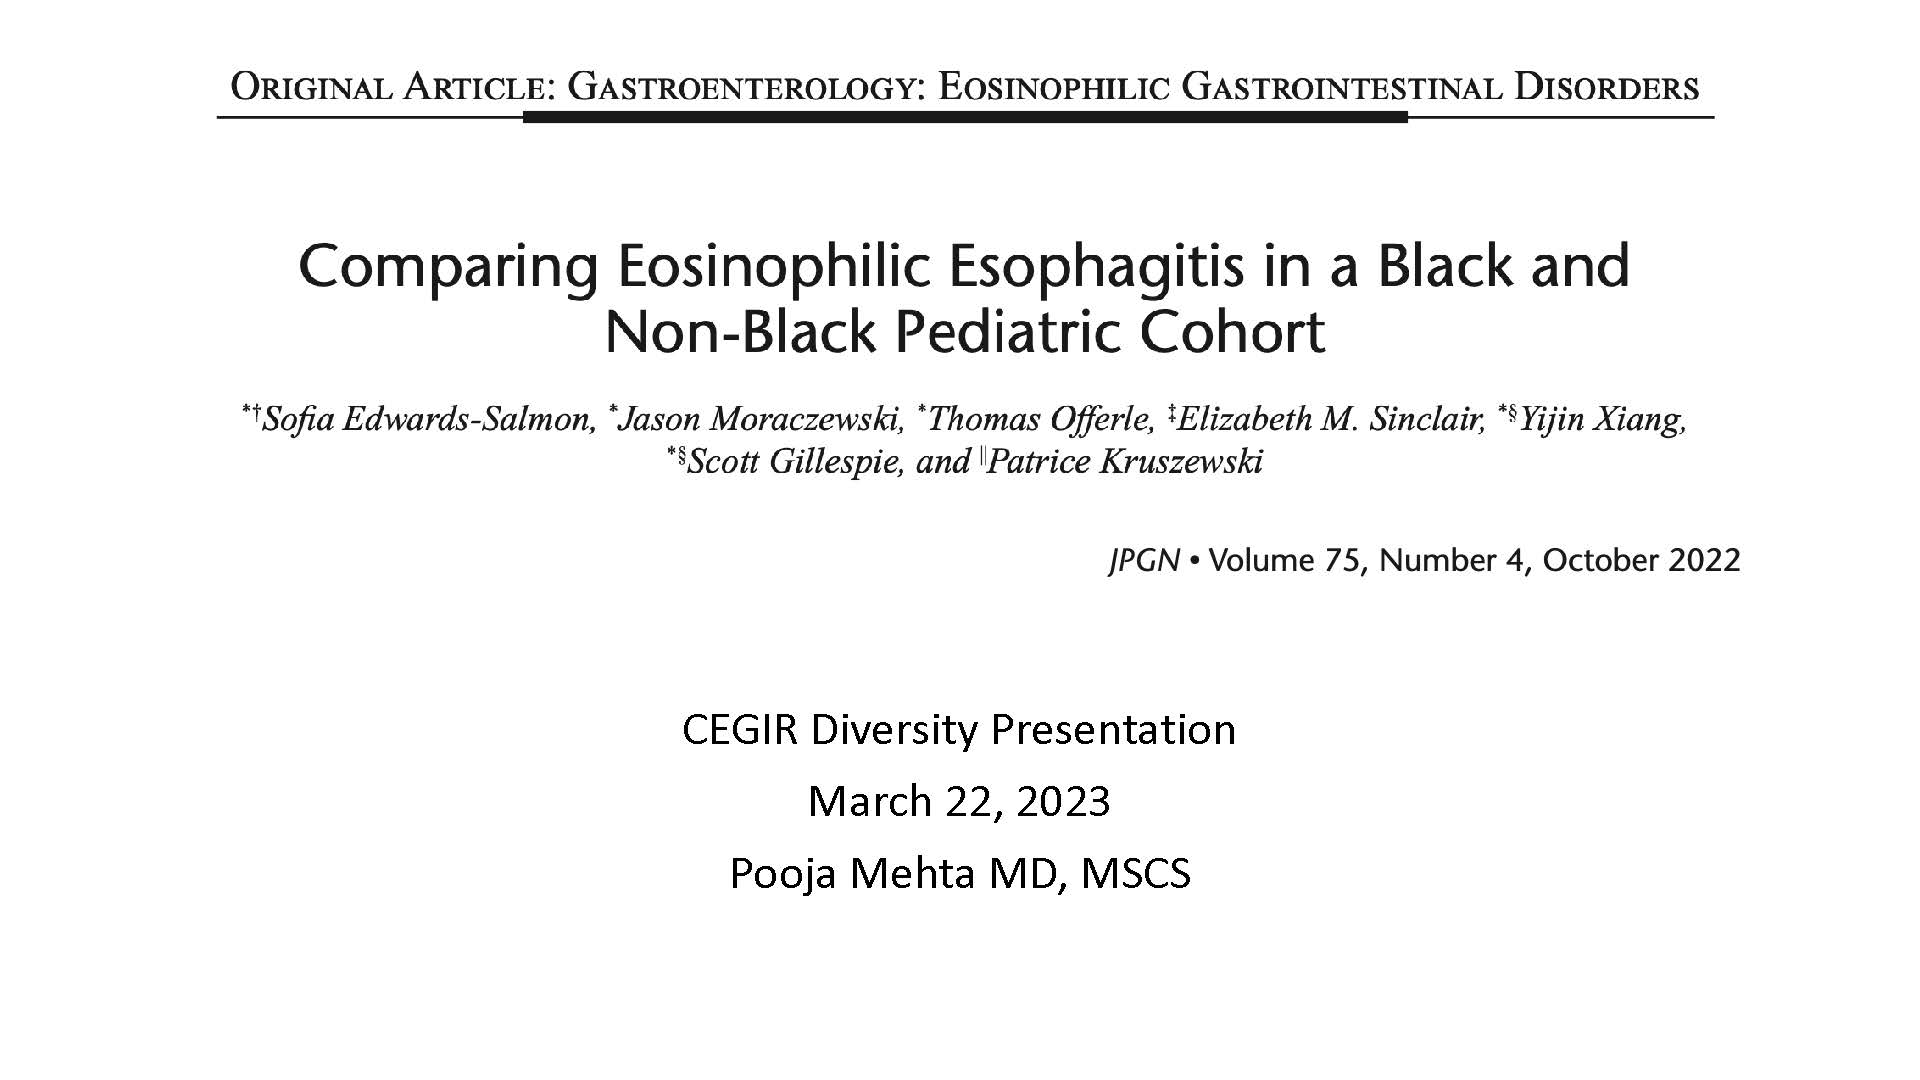 View the CEGIR 2023 Presentation on Comparing EoE in a Black and Non-Black Pediatric Cohort.